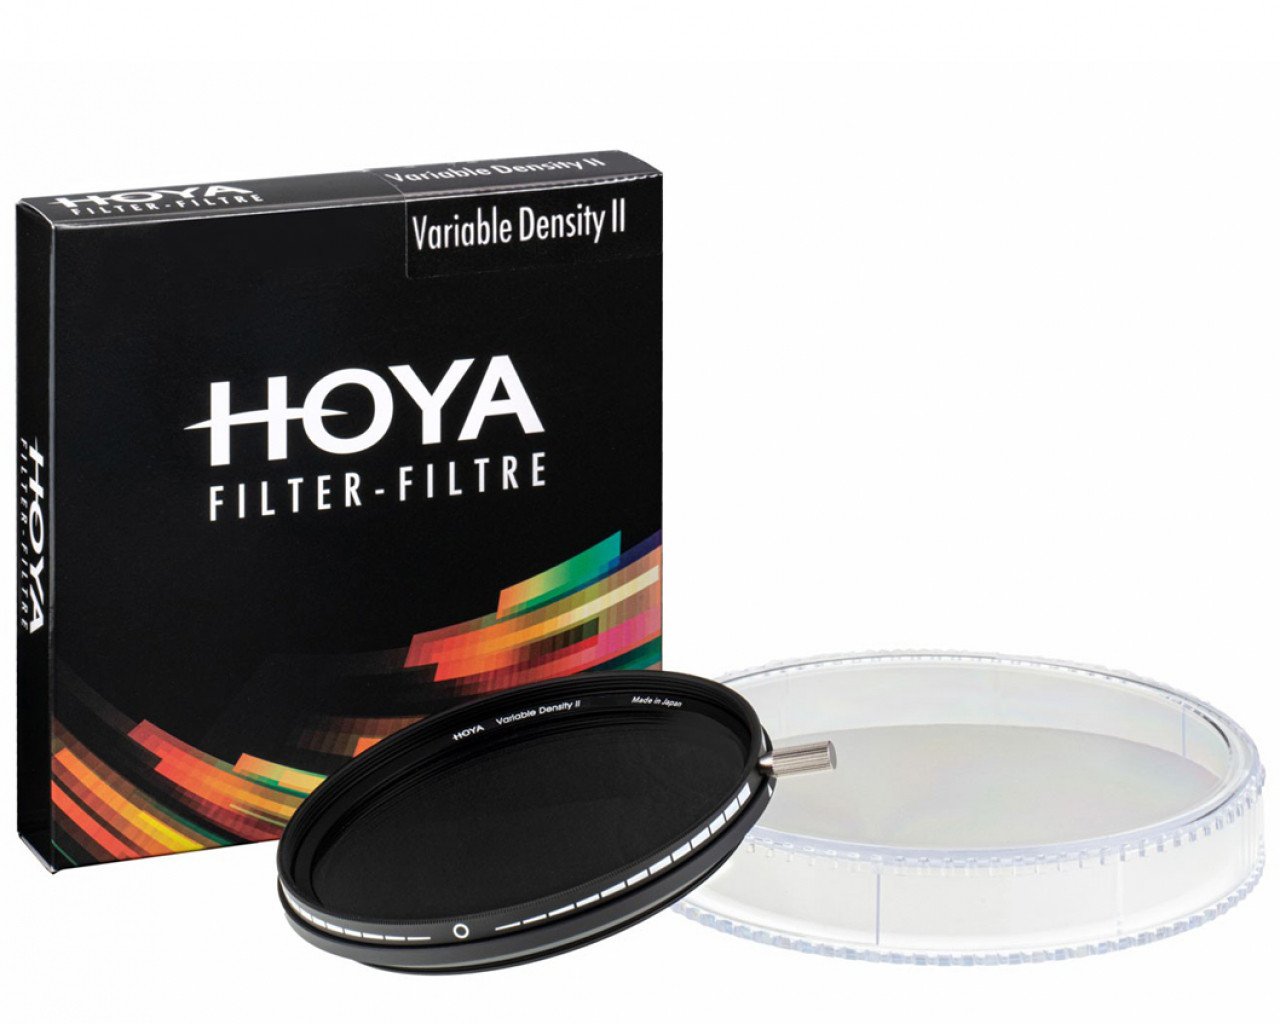 Hoya Filtro Vario-ND II 52mm